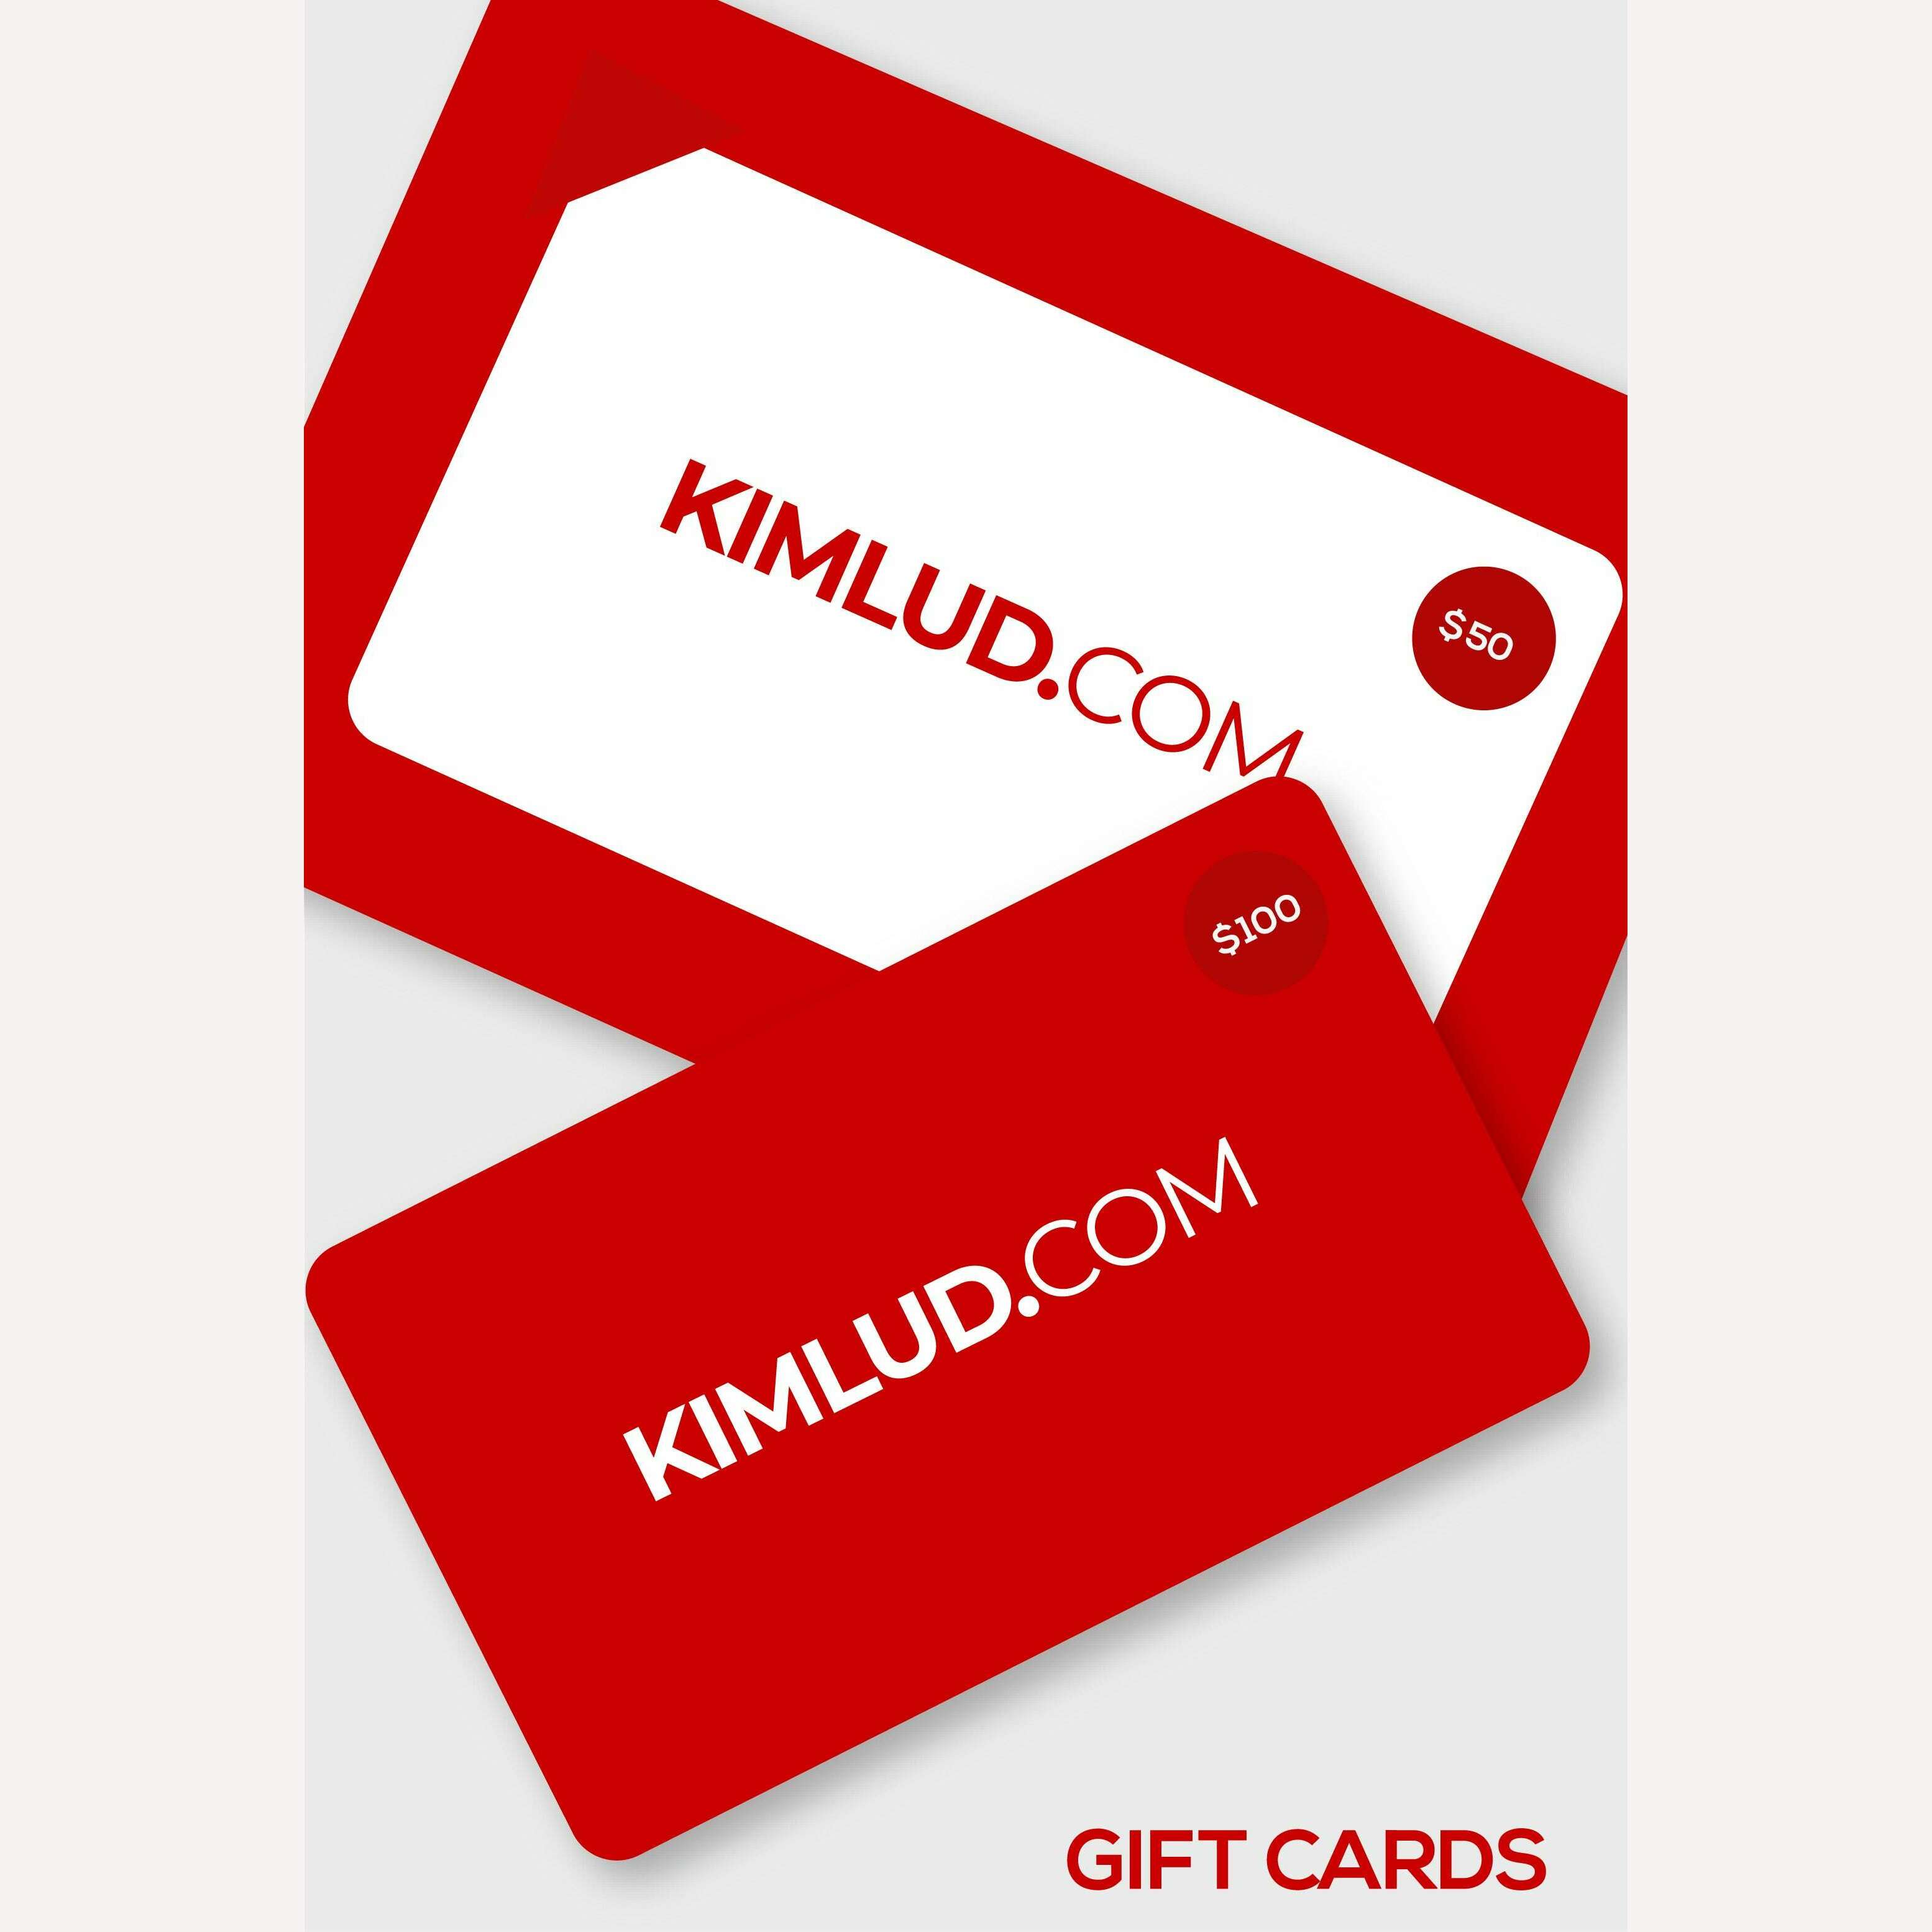 KIMLUD, Kimlud GIft Card, KIMLUD Women's Clothes